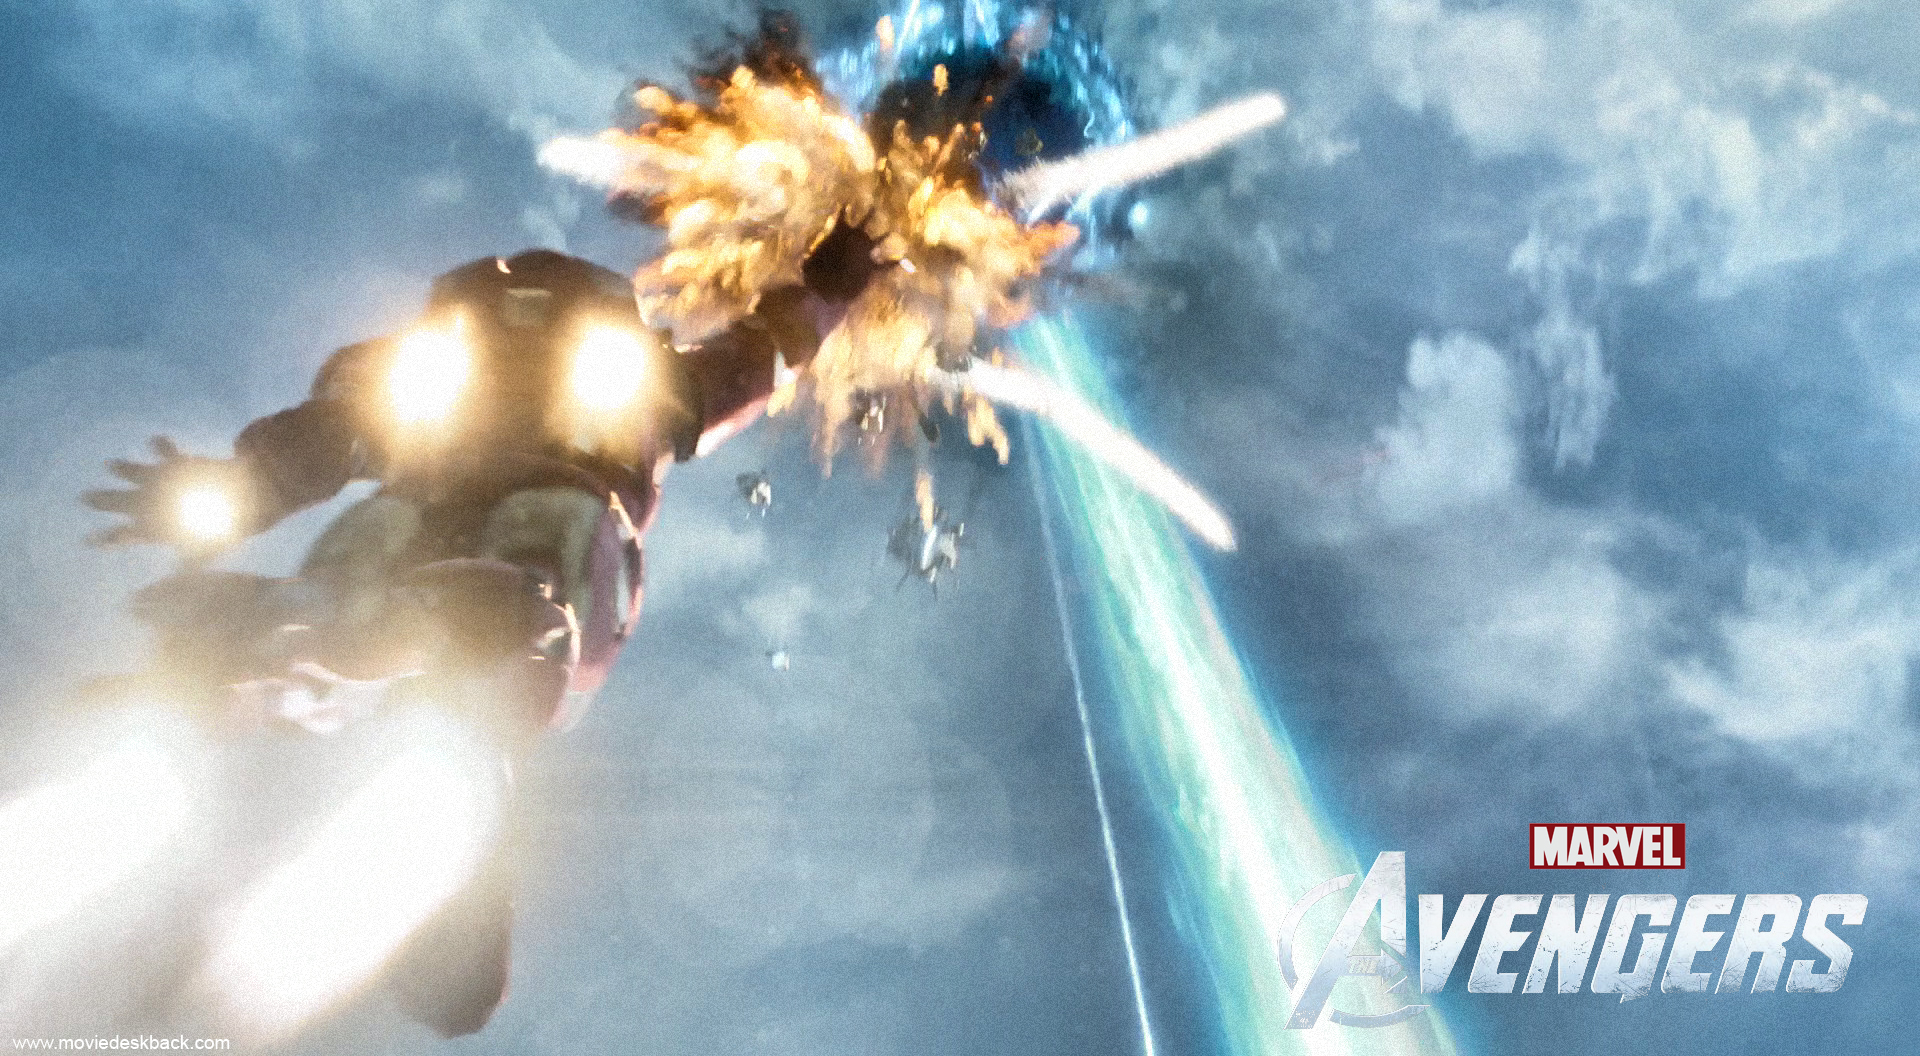 The Avengers (2012) Iron Man flying